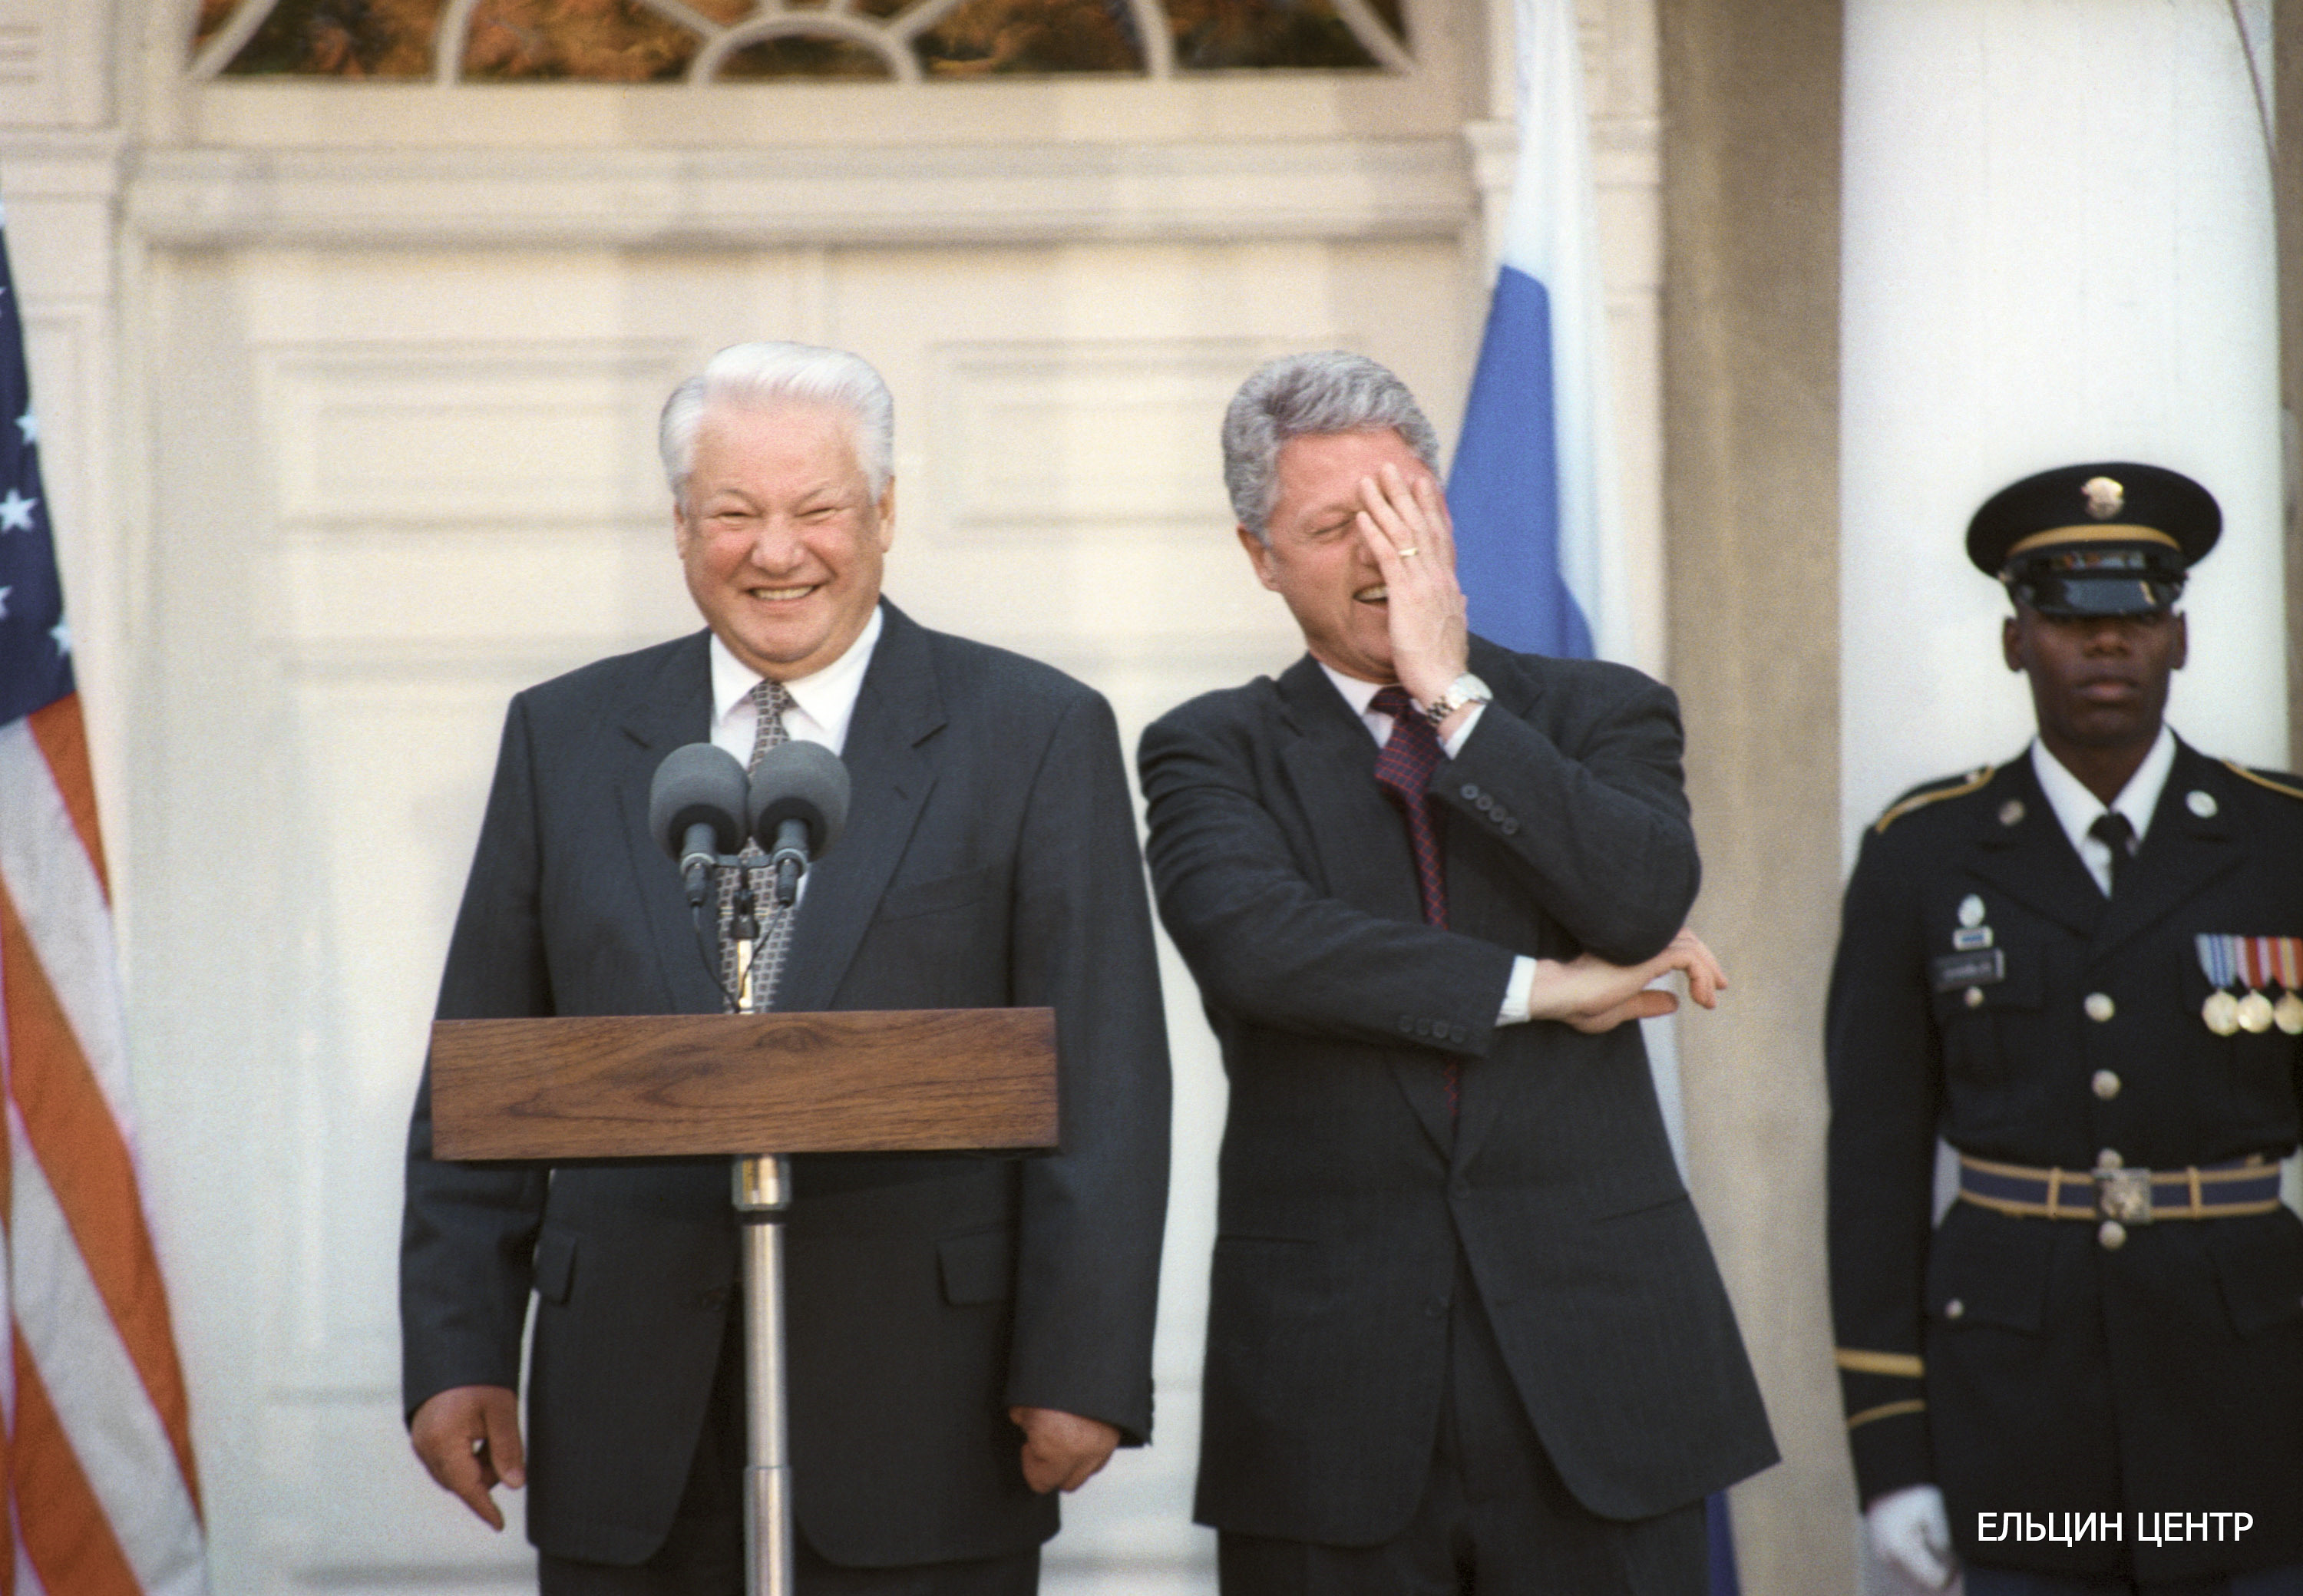 Что для Вас эпоха Ельцина?
